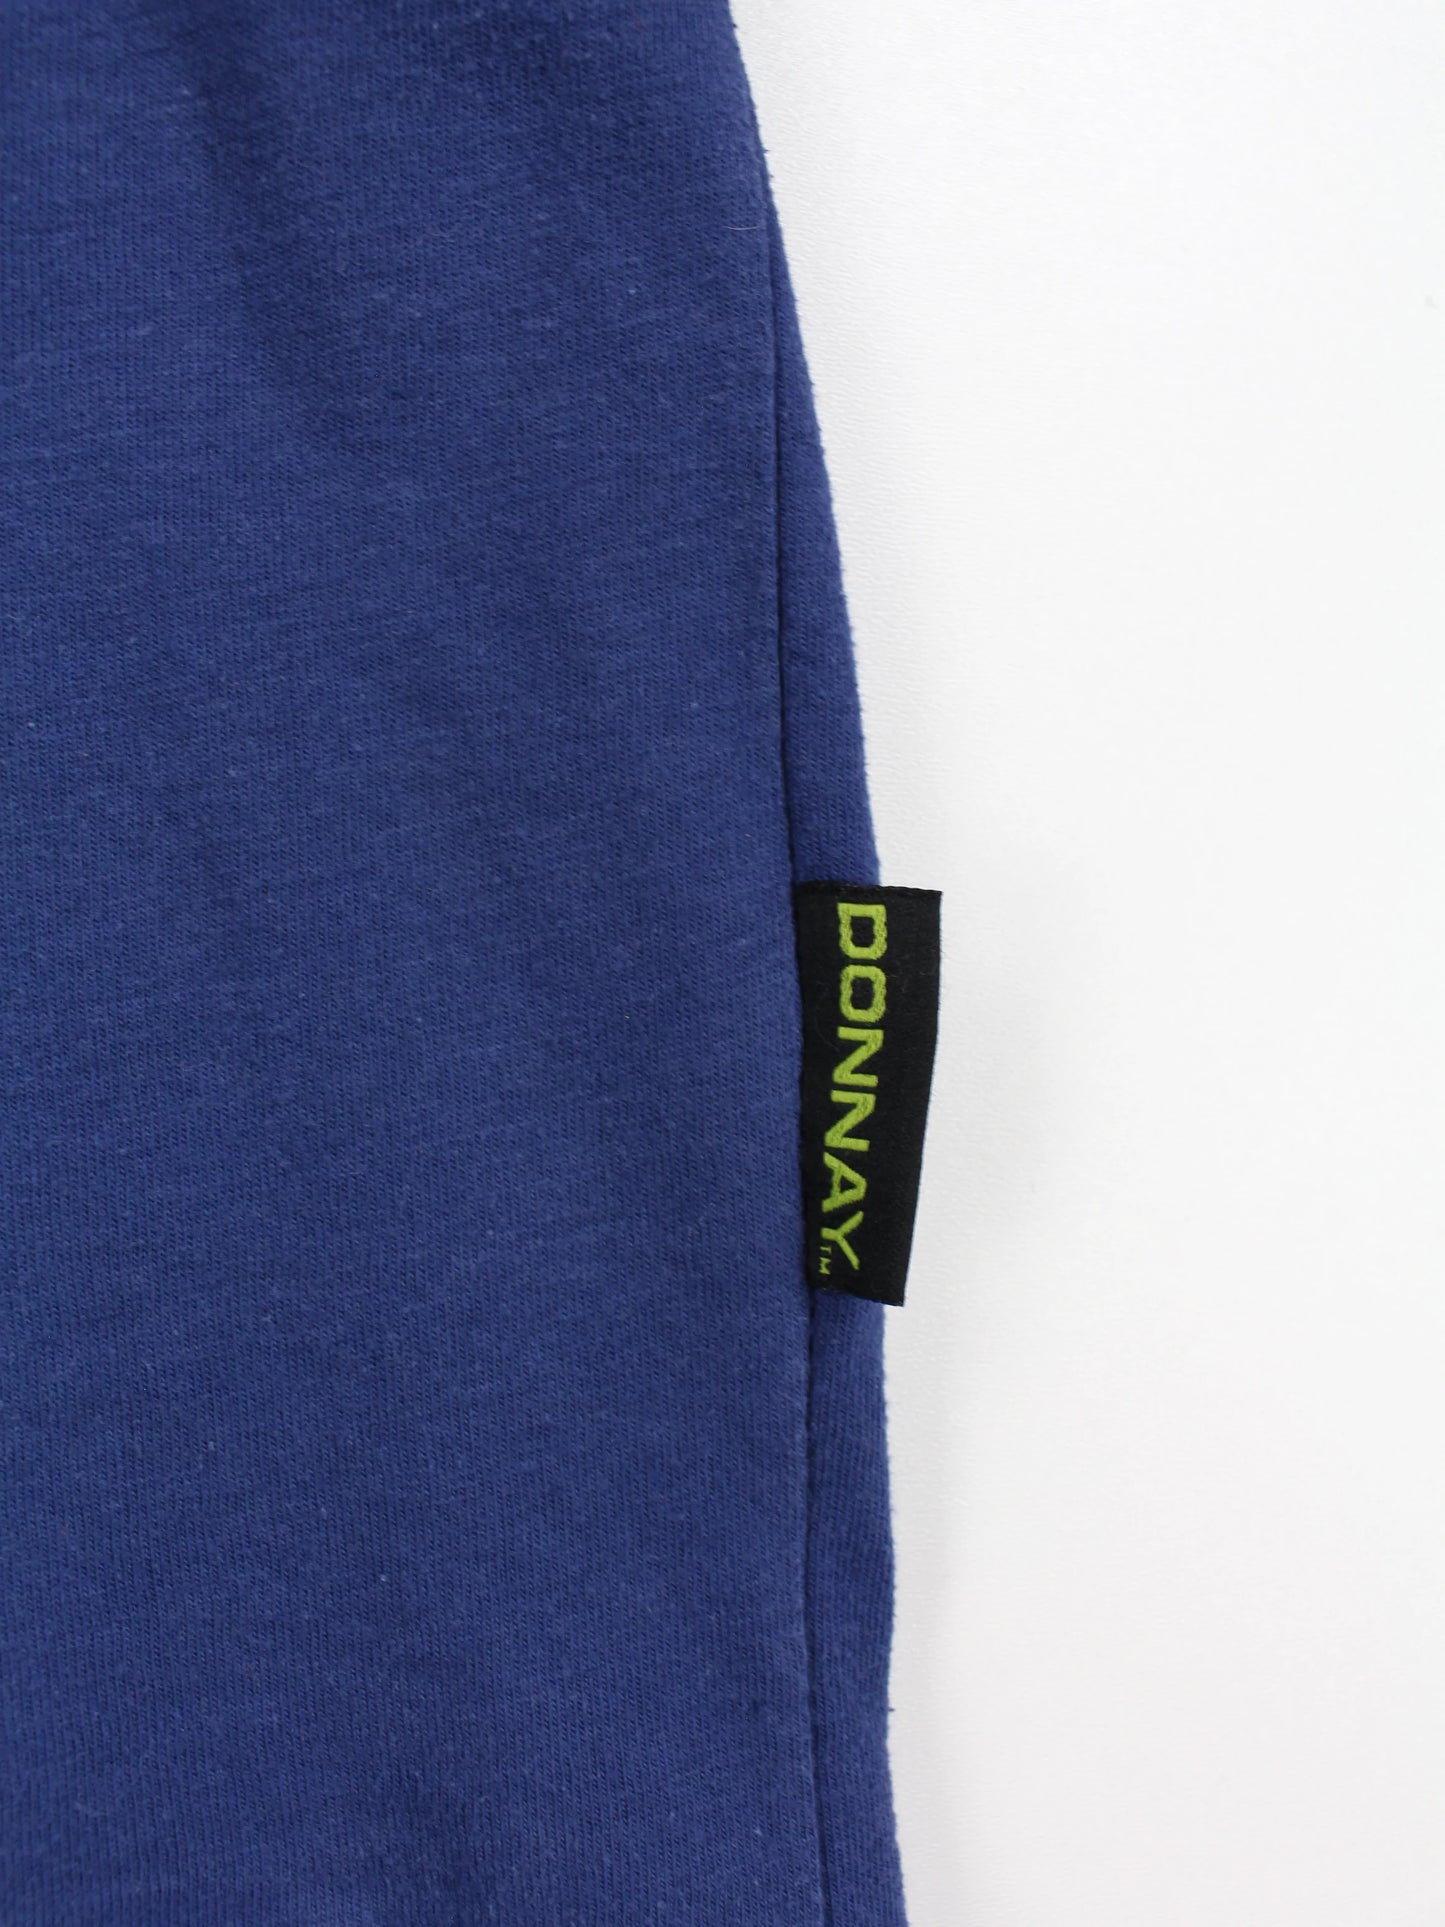 Donnay Print T-Shirt Blau L